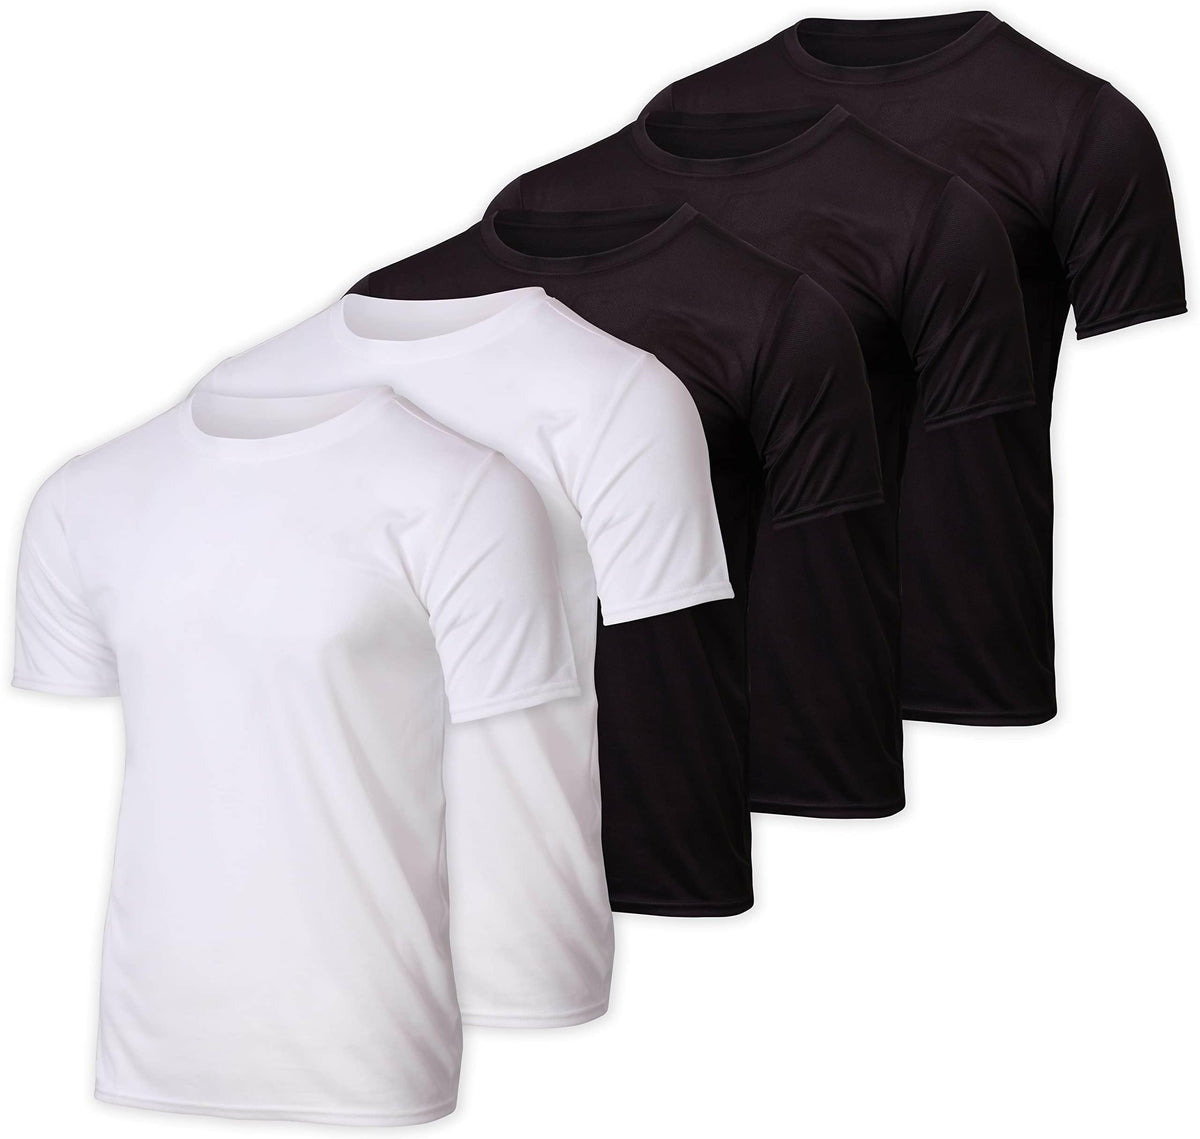 Khanani's T Shirt for men Pack of 5 Black and White Tshirts for men summer tees - ValueBox